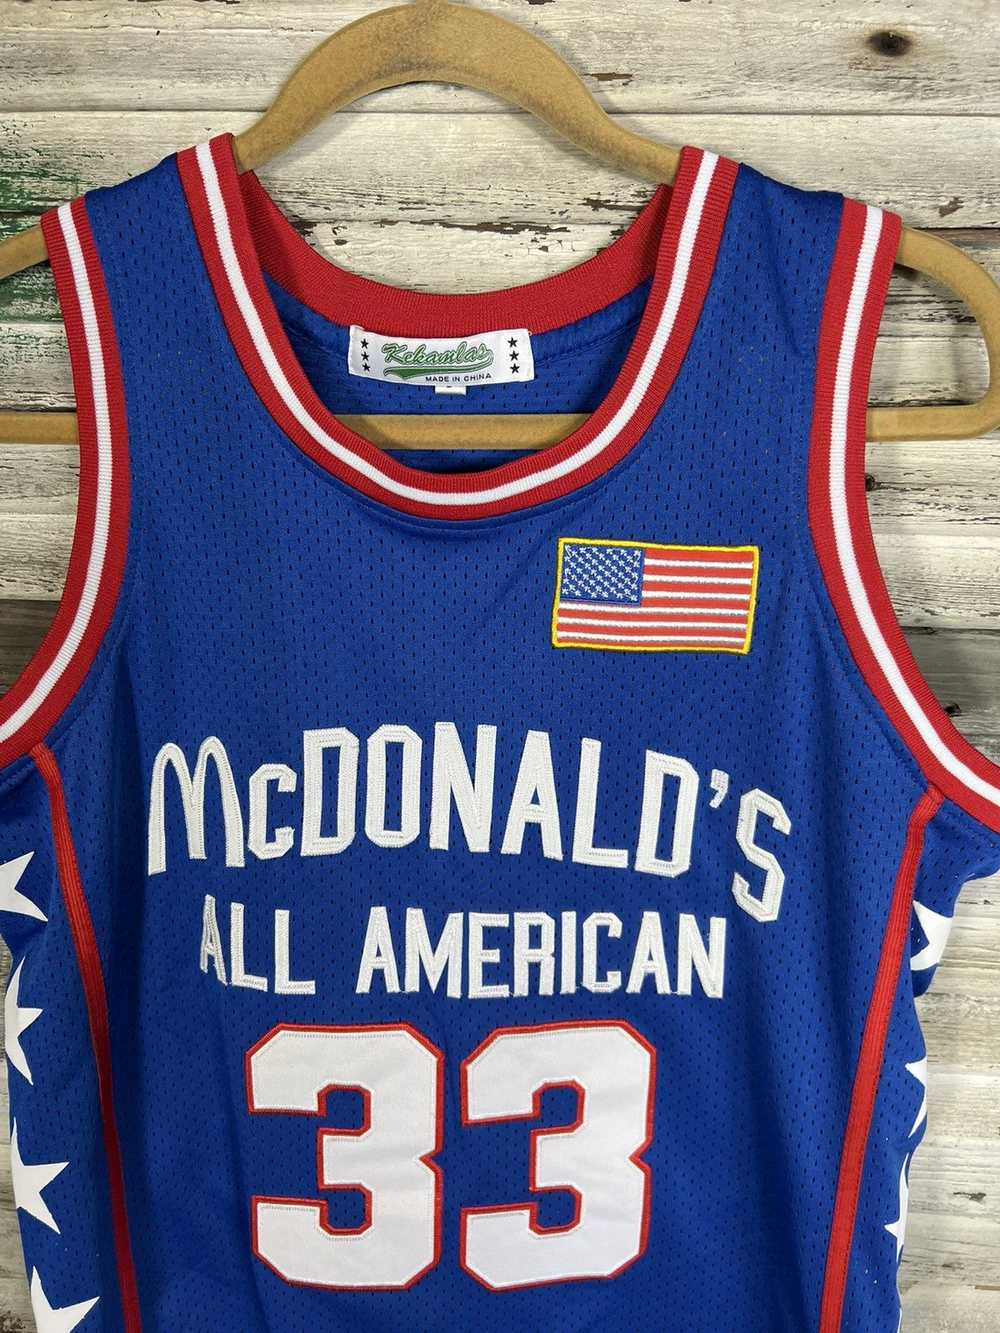 NBA KOBE BRYANT McDonalds All American Jersey - image 3